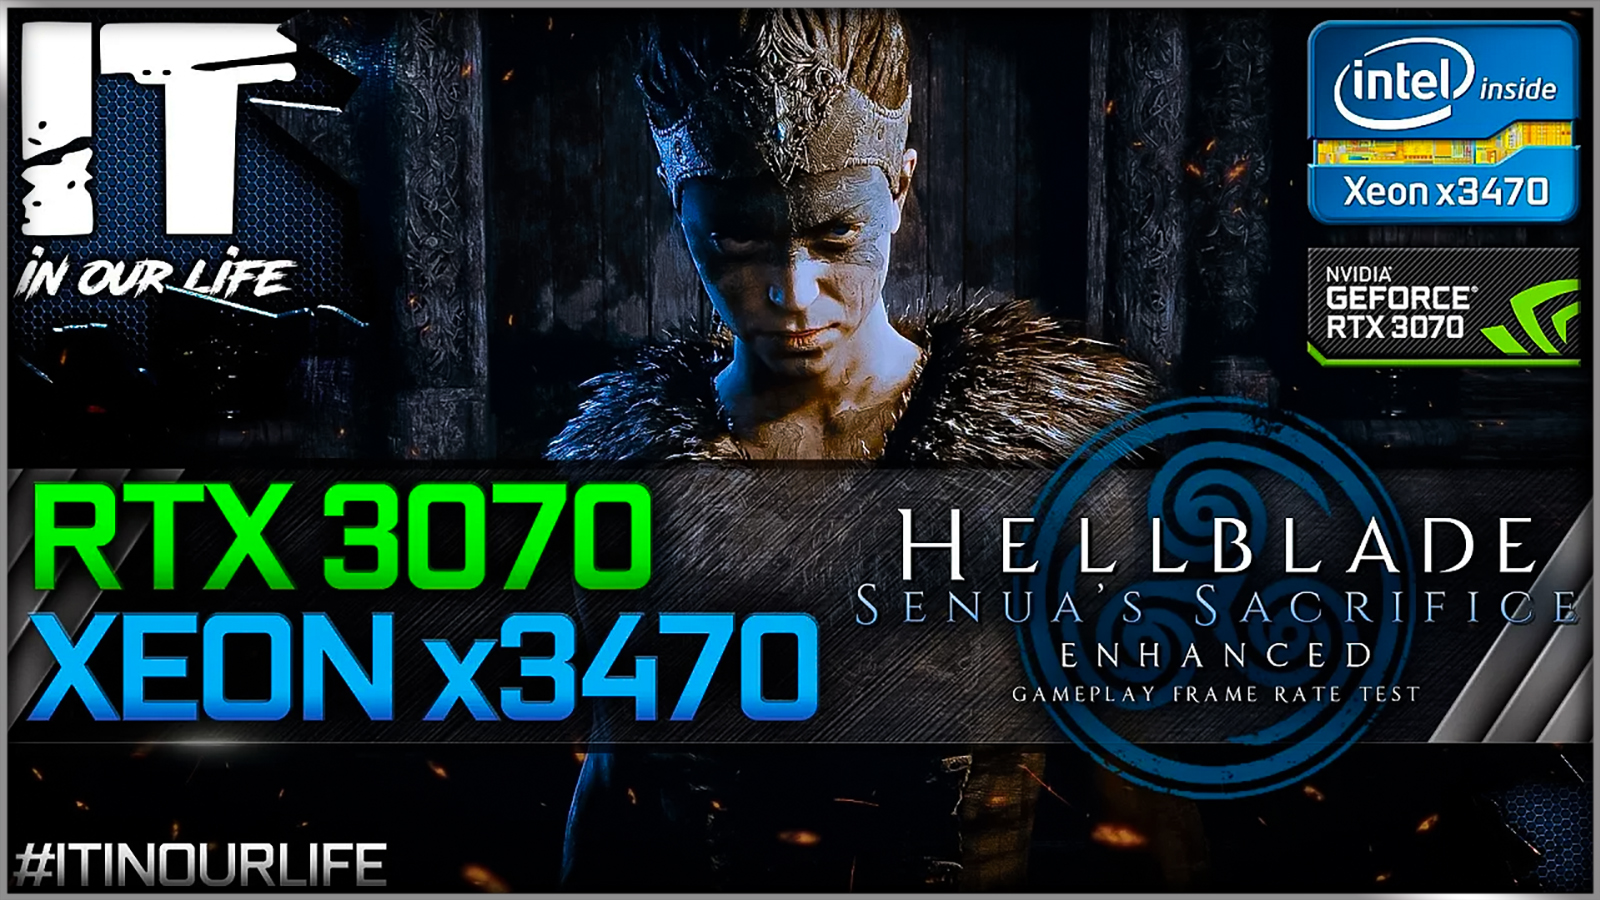 Hellblade: Senua’s Sacrifice - Xeon x3470 + RTX 3070 | Frame Rate Test | 1080p, 1440p, 2160p